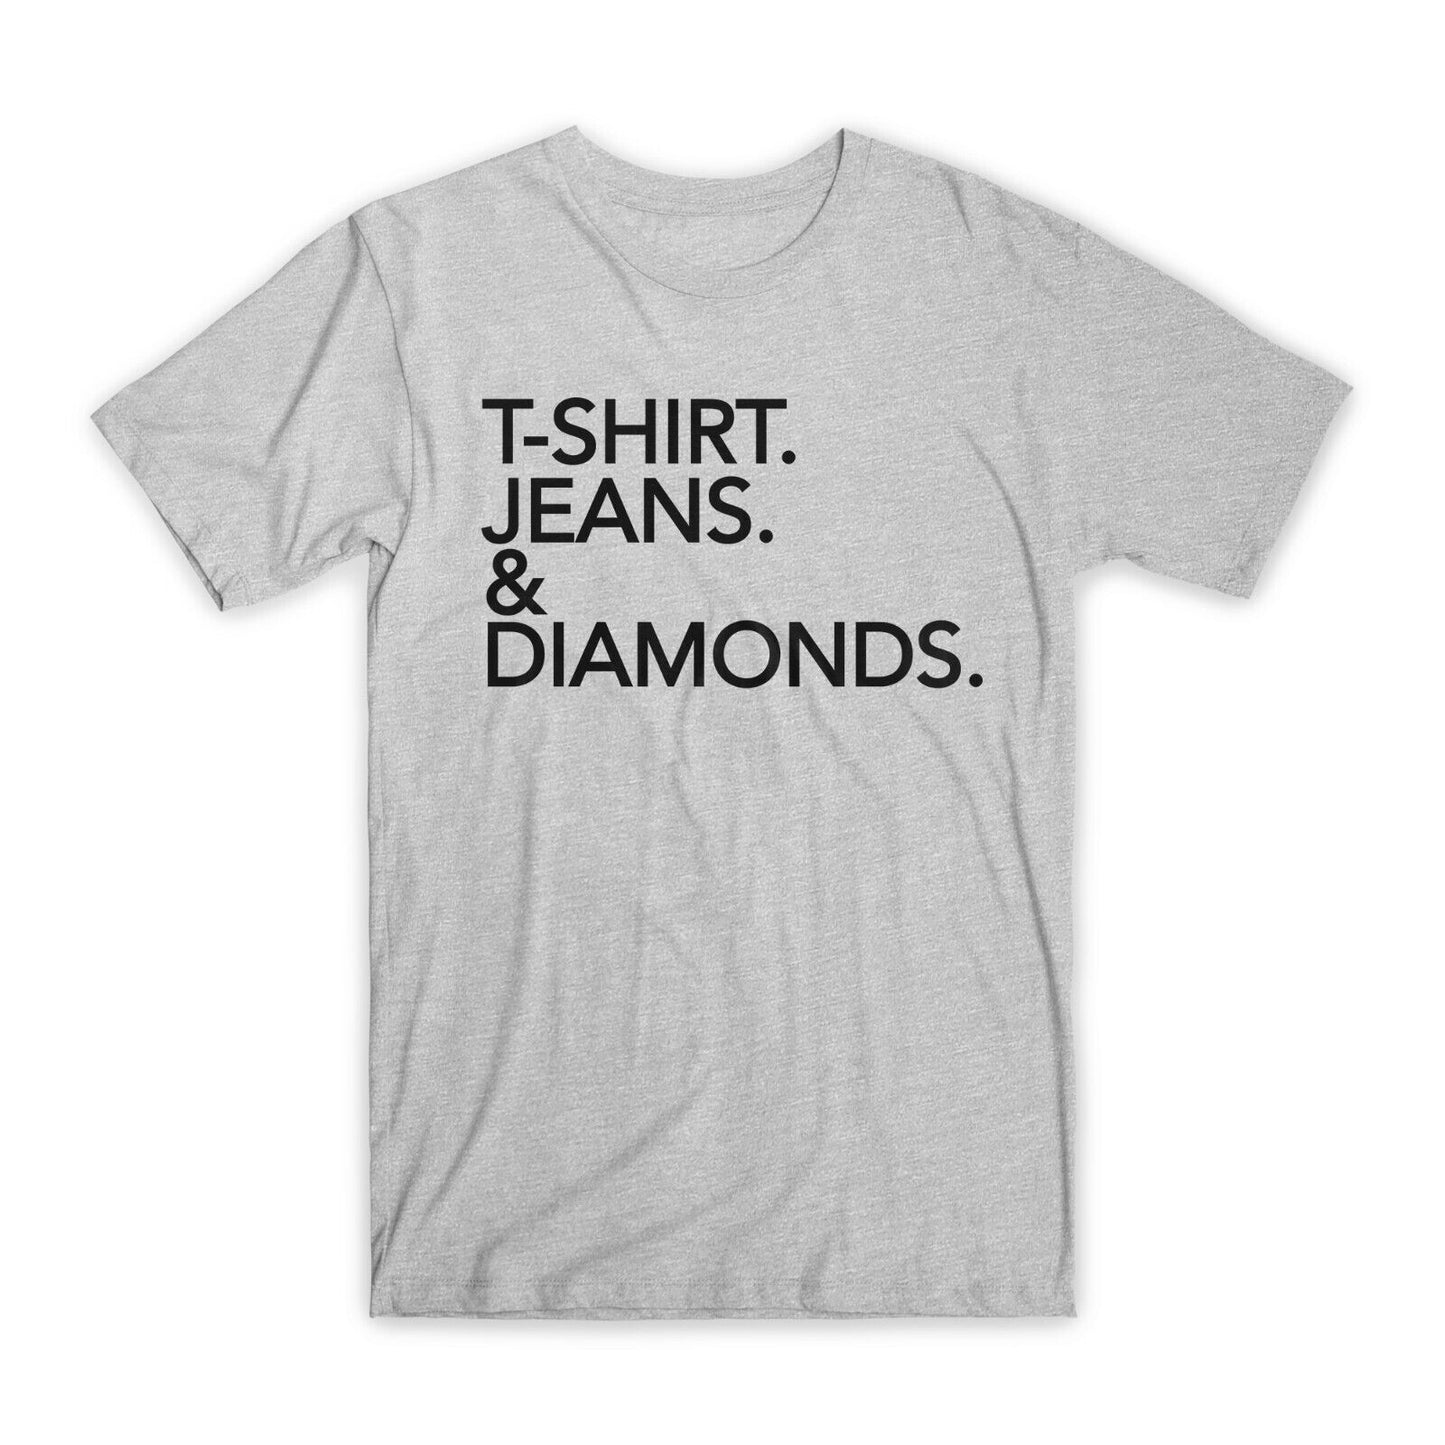 T-Shirt Jeans & Diamonds T-Shirt Premium Soft Cotton Funny Tees Novelty Gift NEW